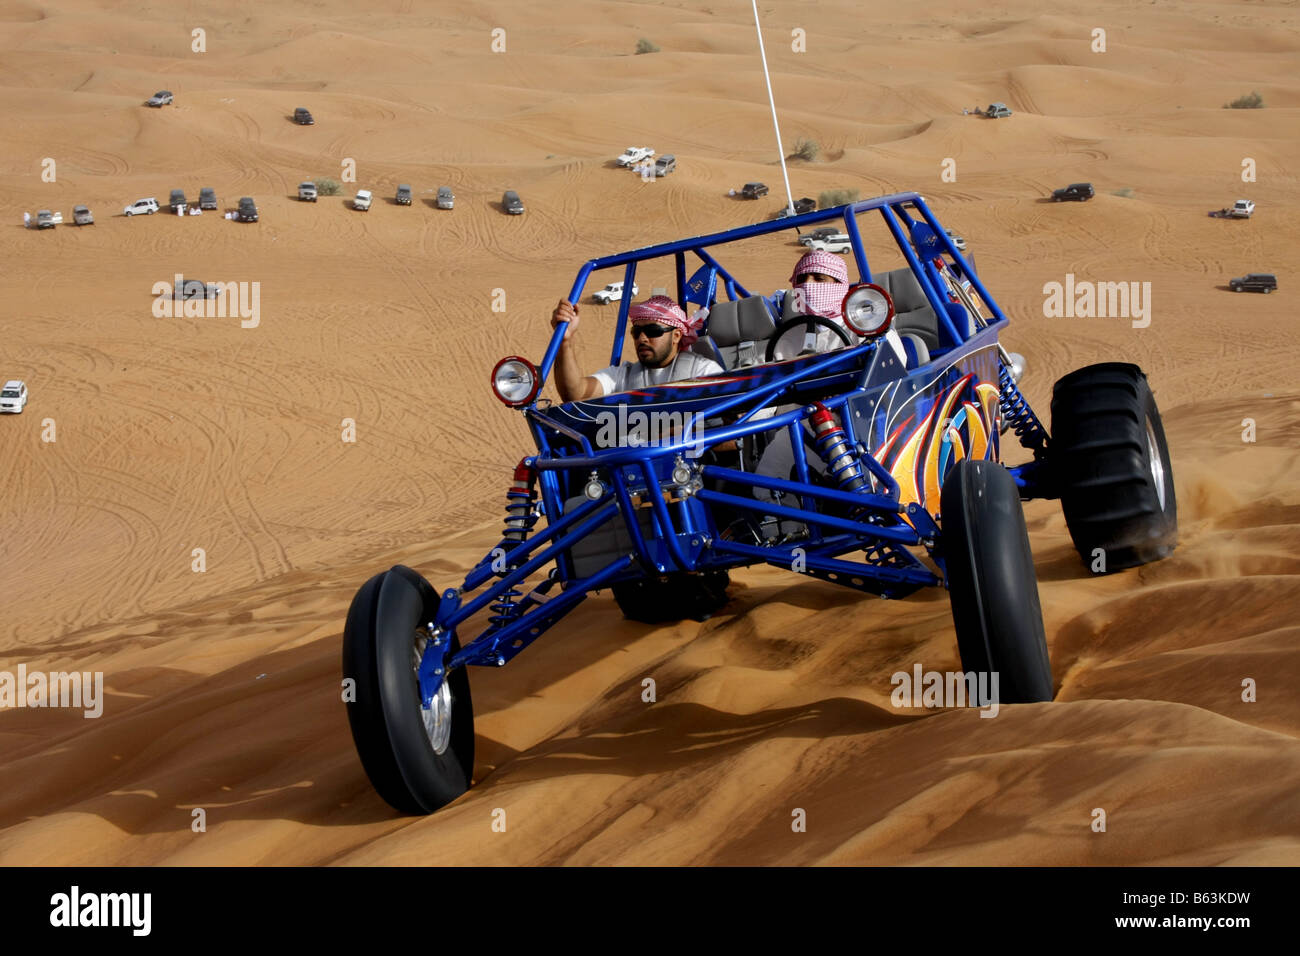 A DUNE BUGGY AT THE DESERT SAFARI IN DUBAI Stock Photo - Alamy